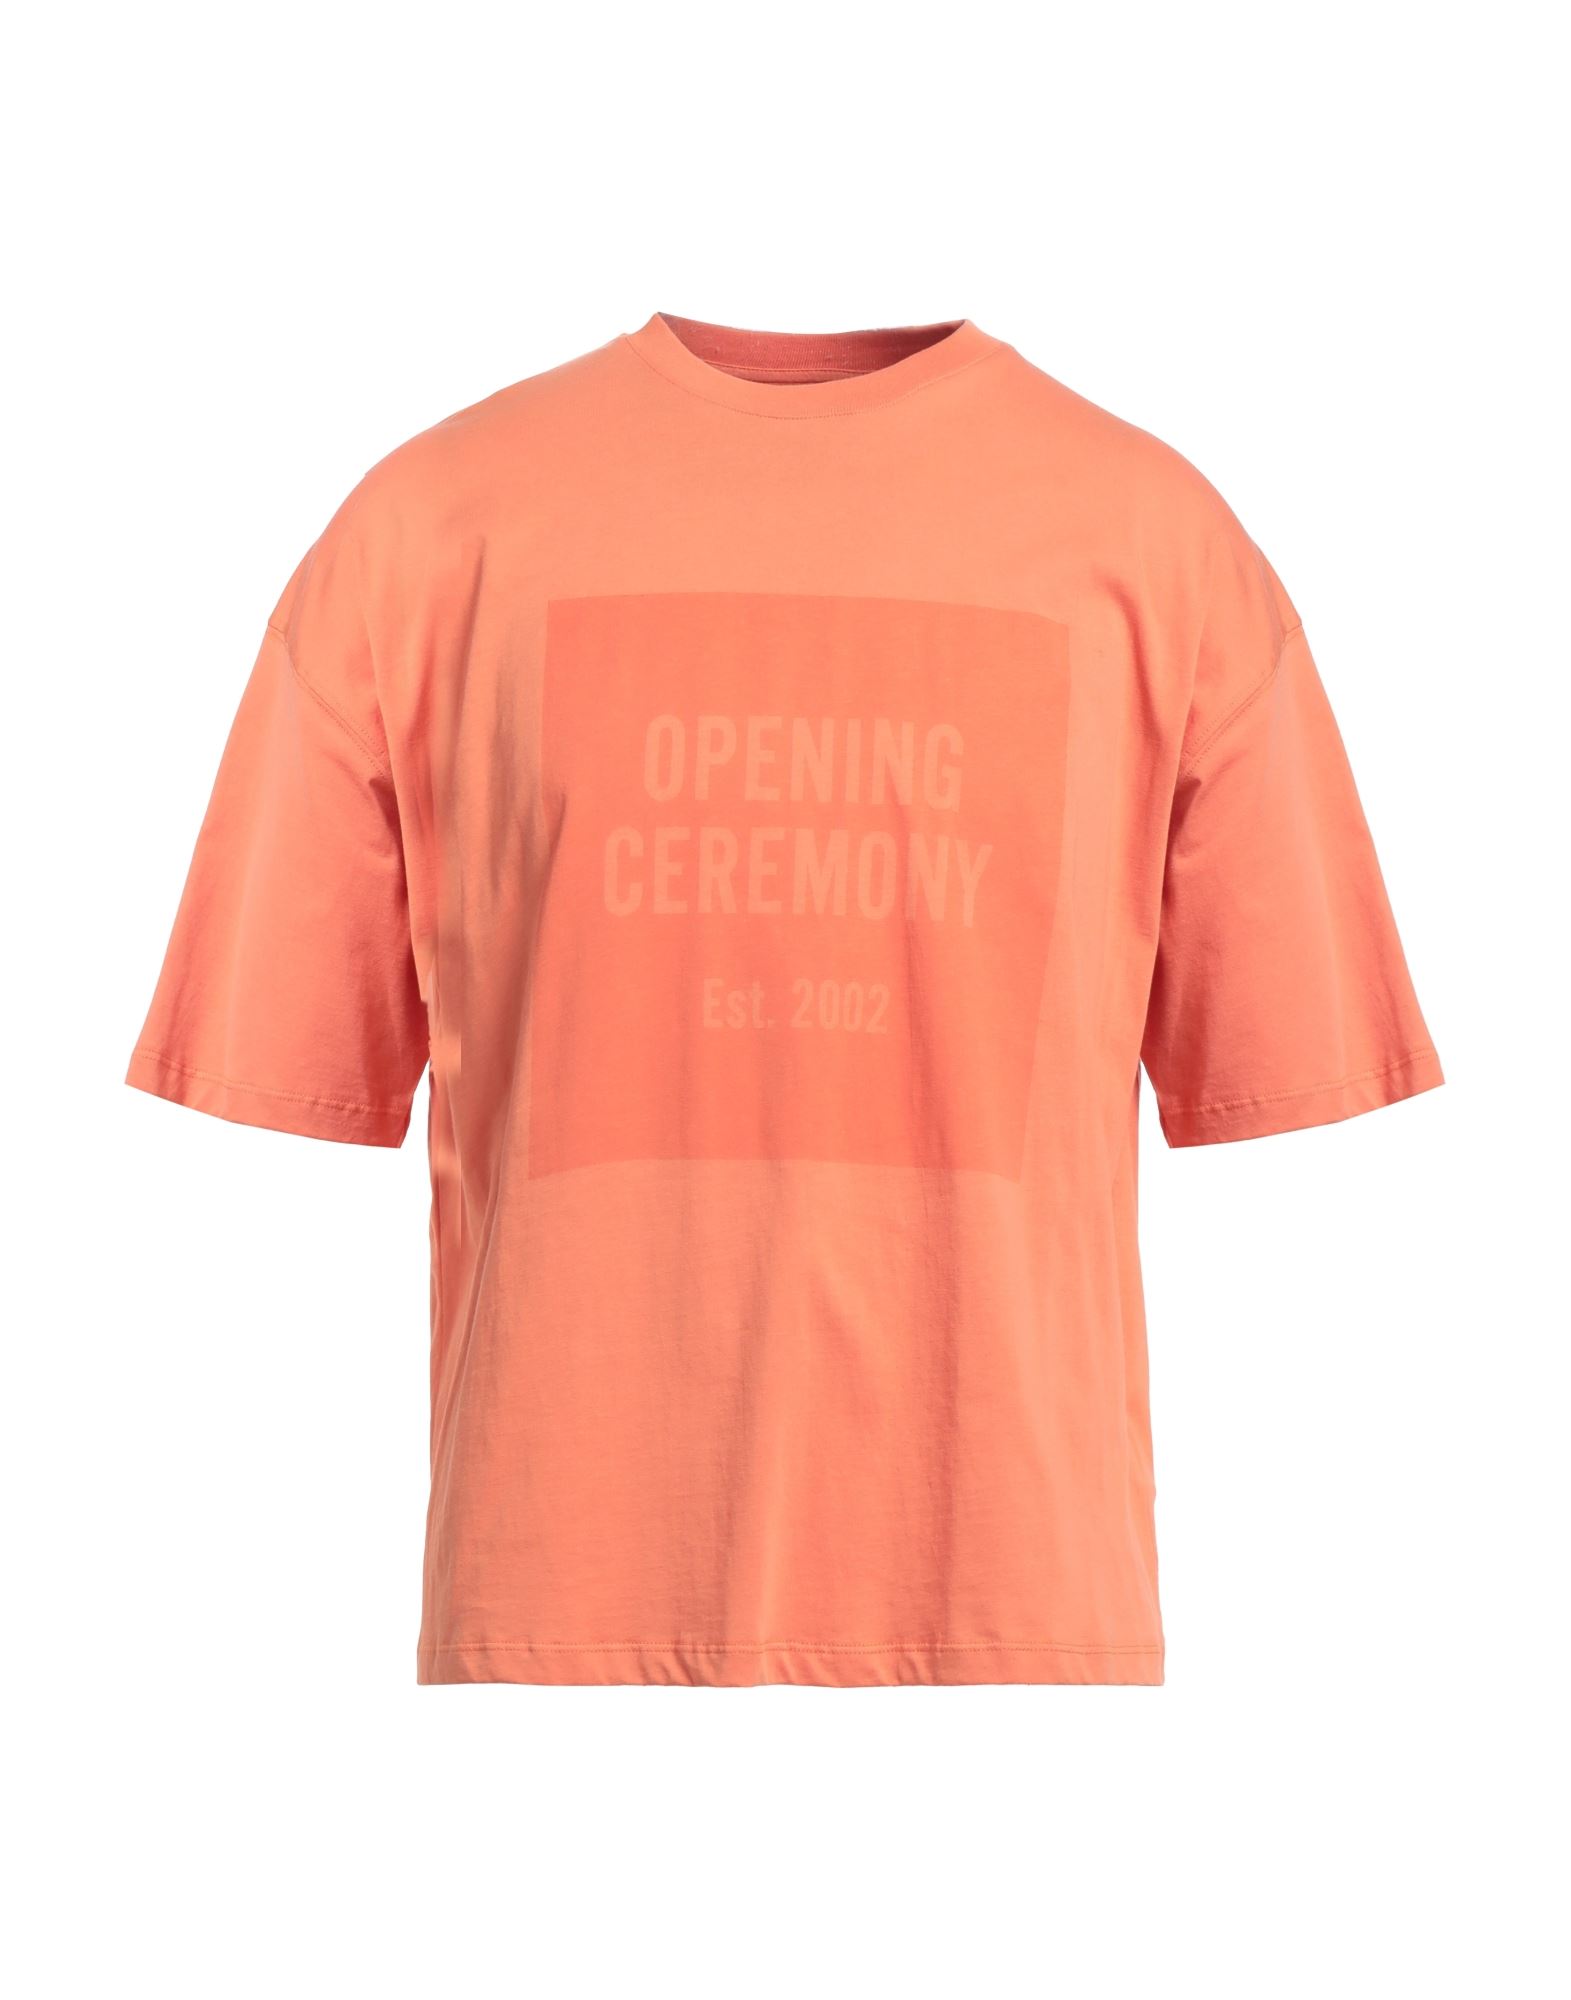 Opening Ceremony T-shirts In Orange